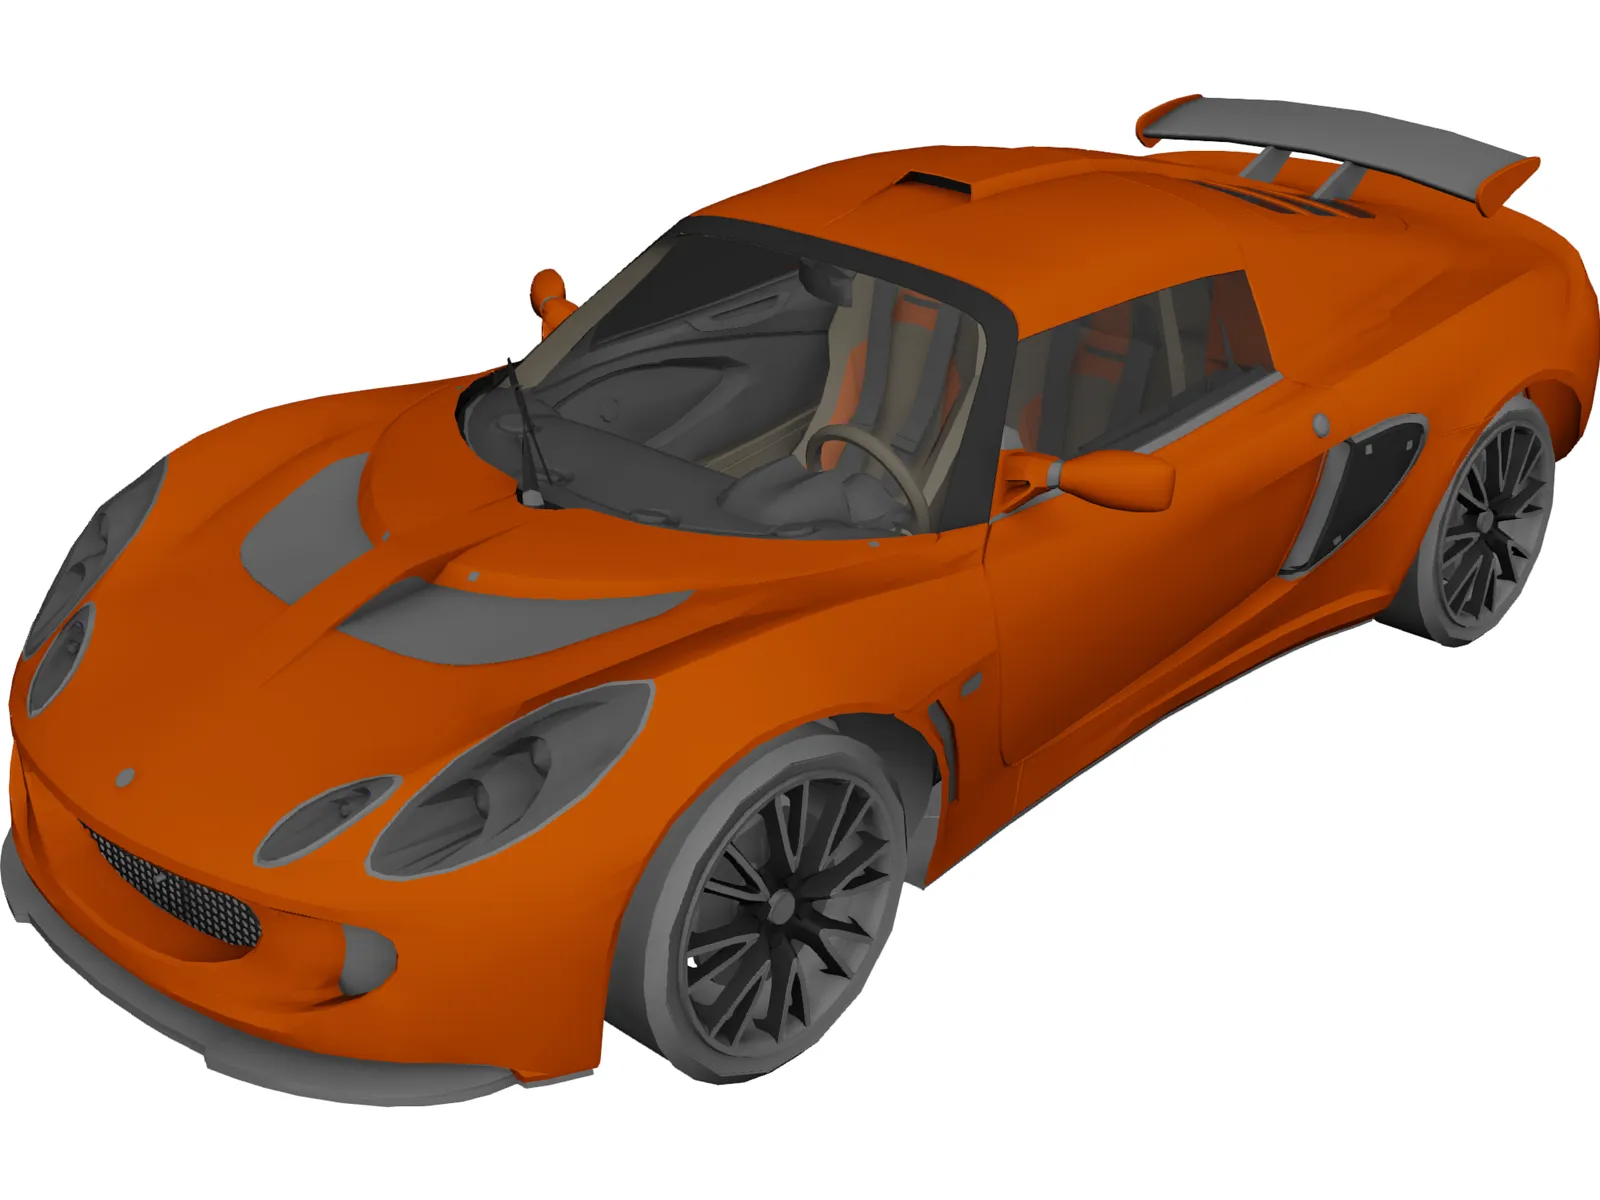 Lotus Exige 3D Model